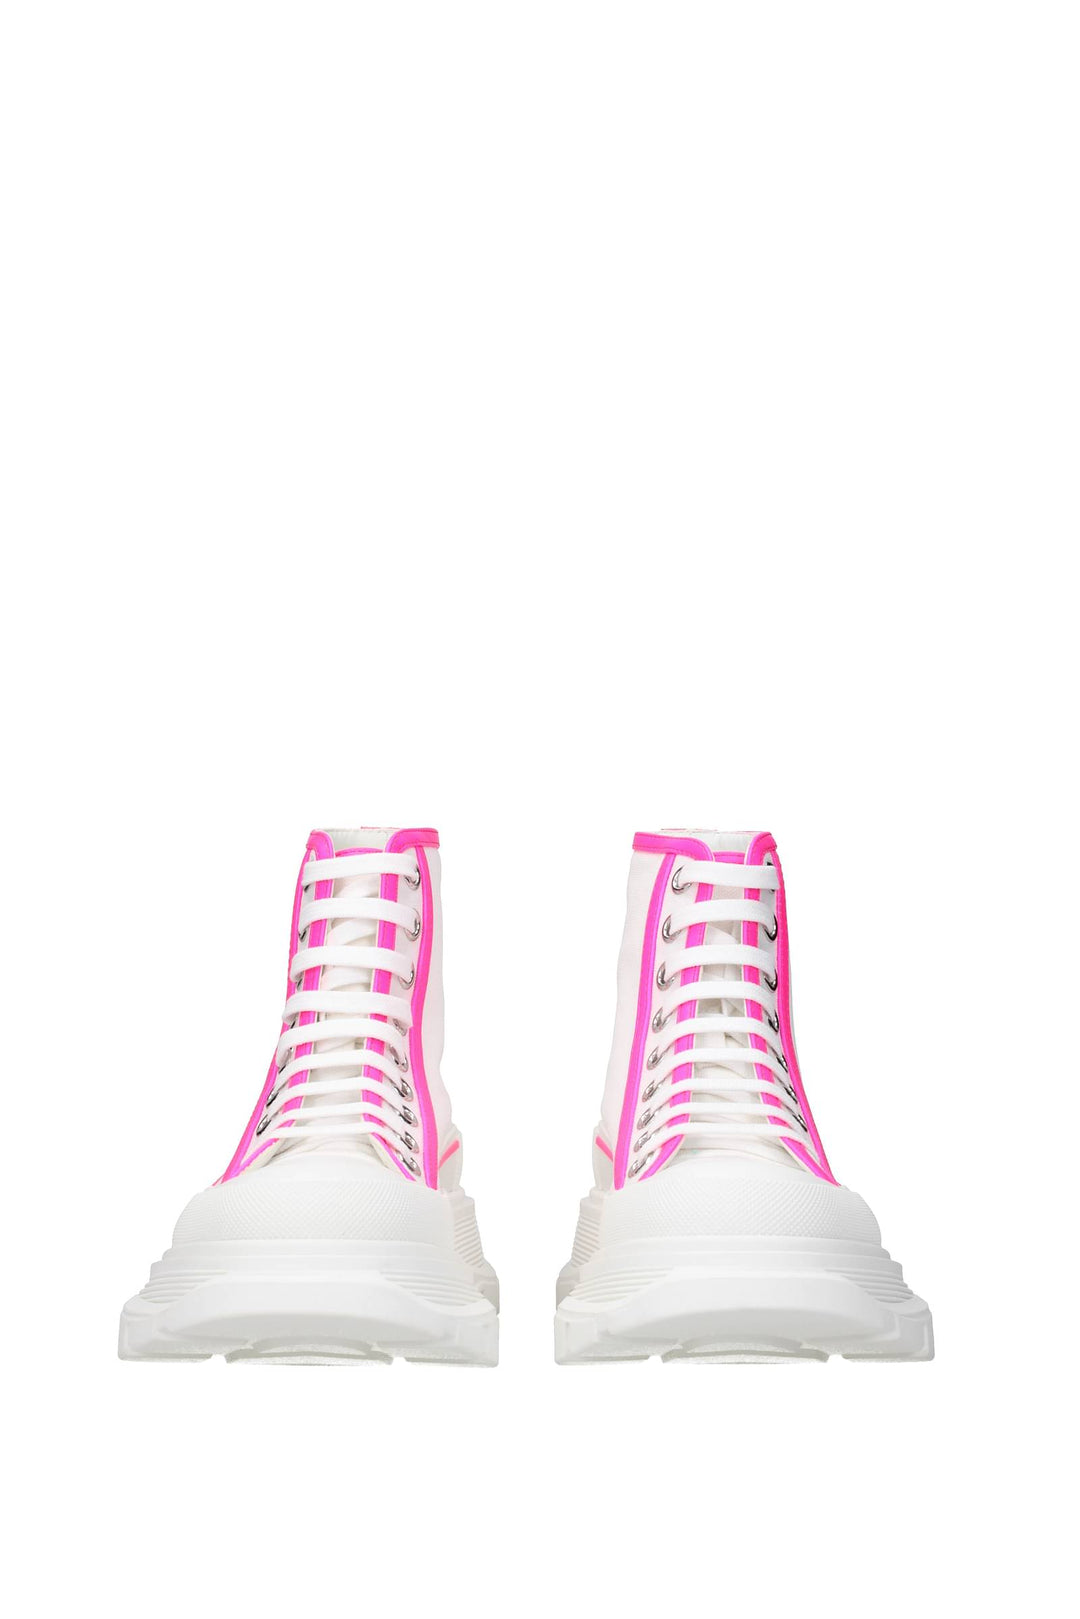 Sneakers Tessuto Bianco Rosa Fluo - Alexander McQueen - Donna